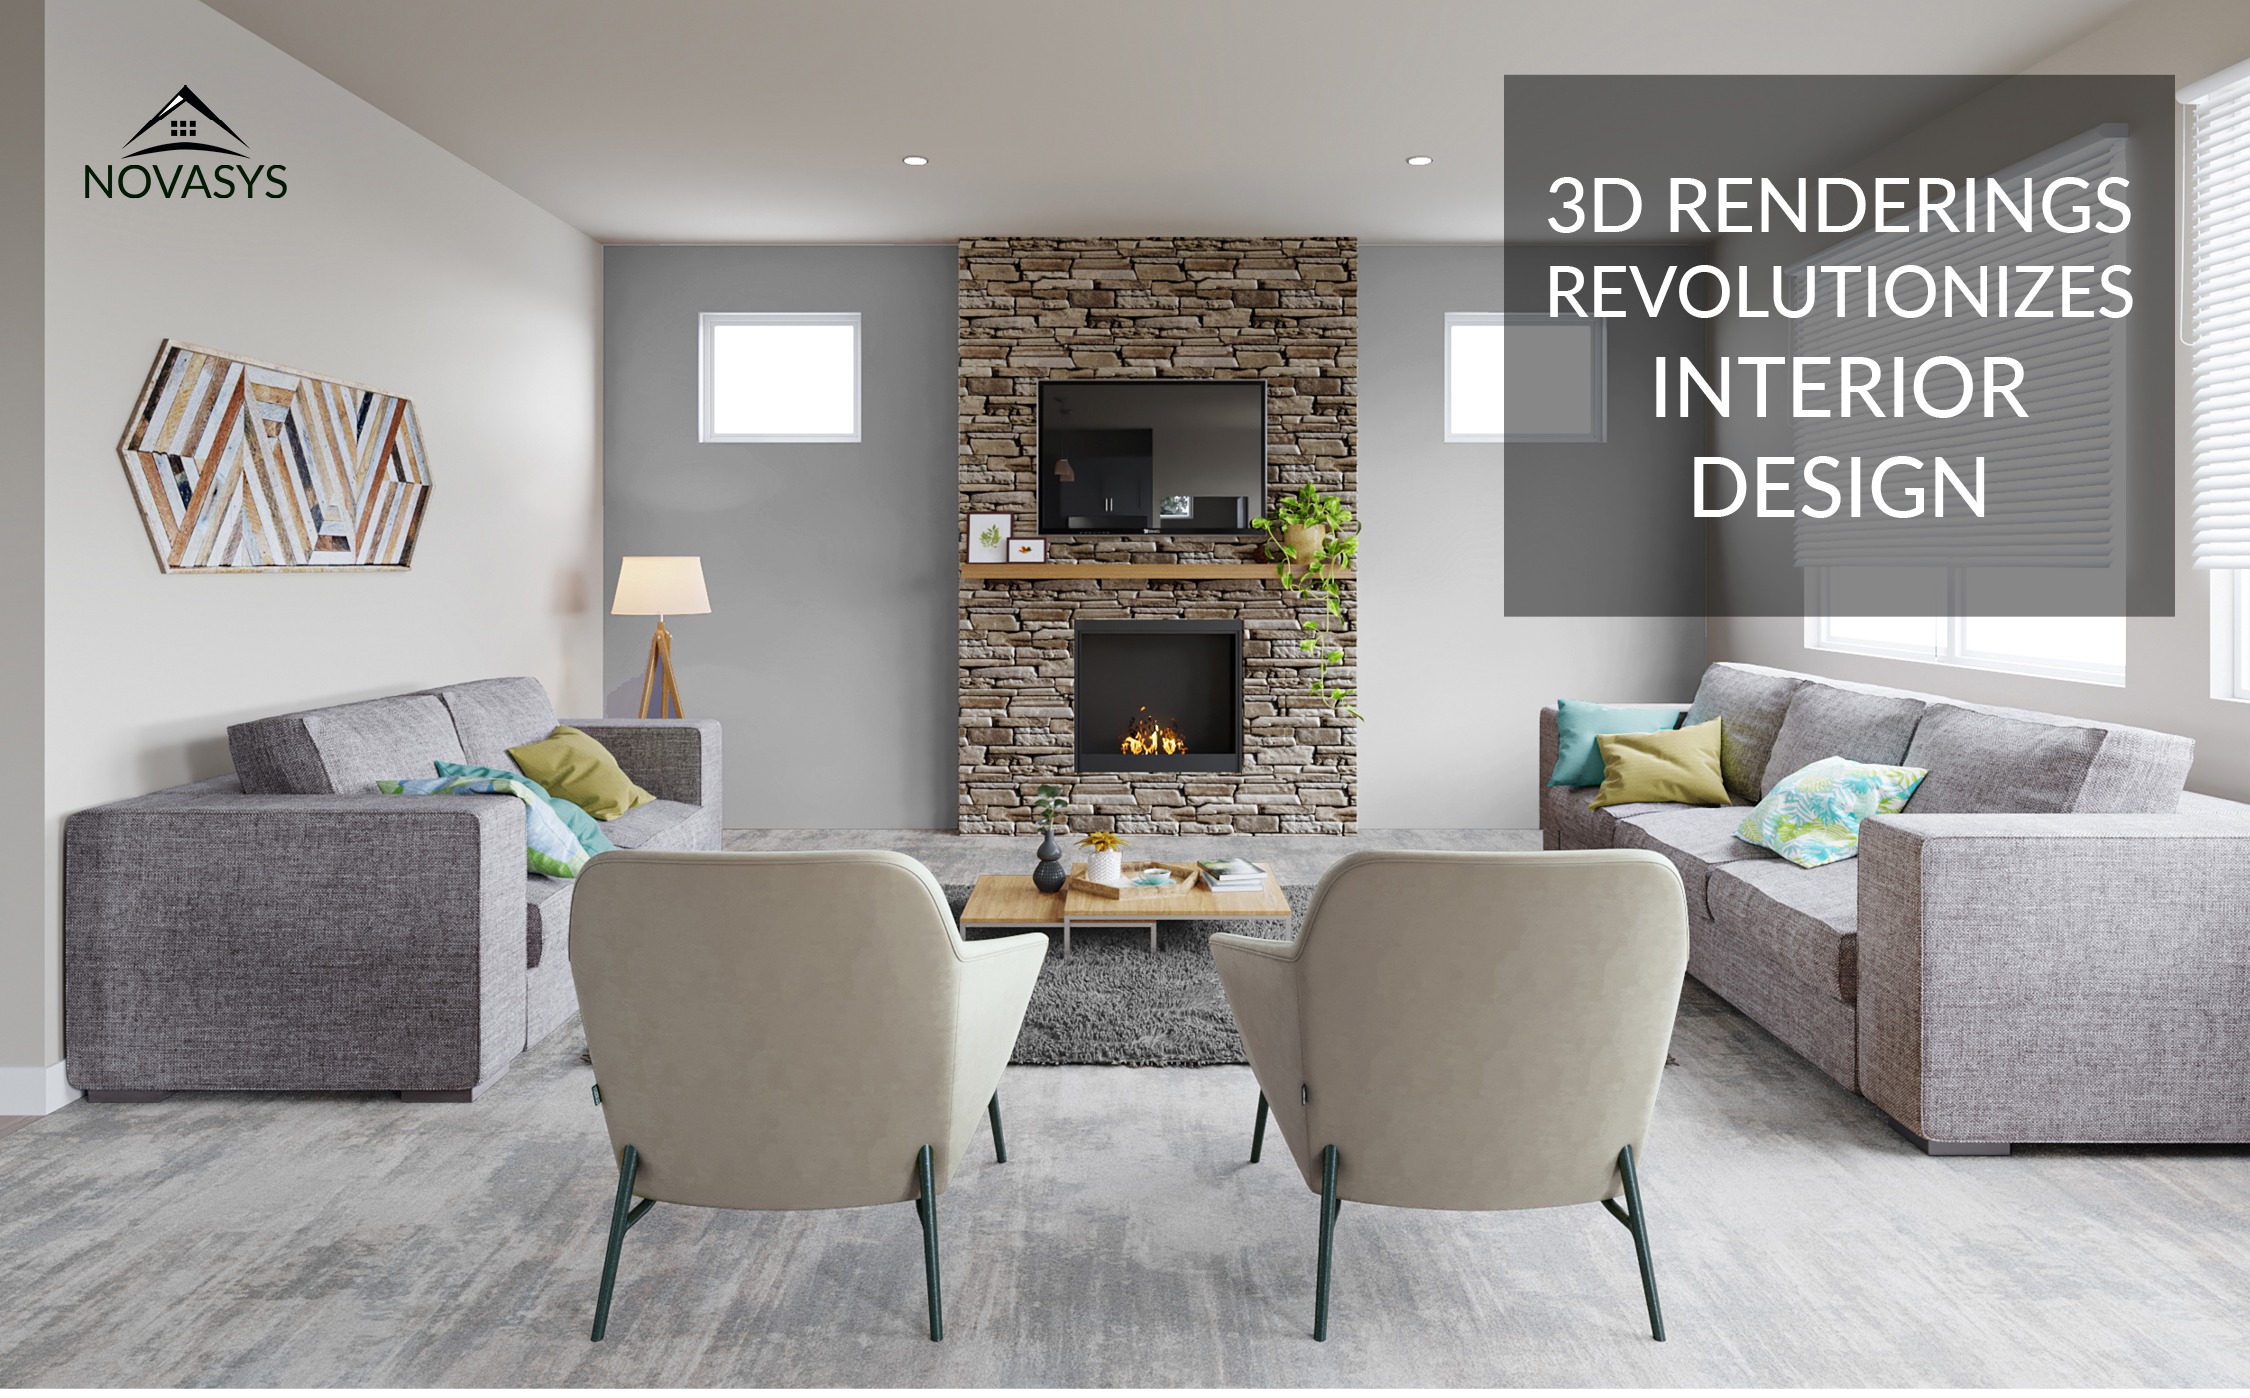 How can 3D Architectural Rendering Revolutionize Interior Design?